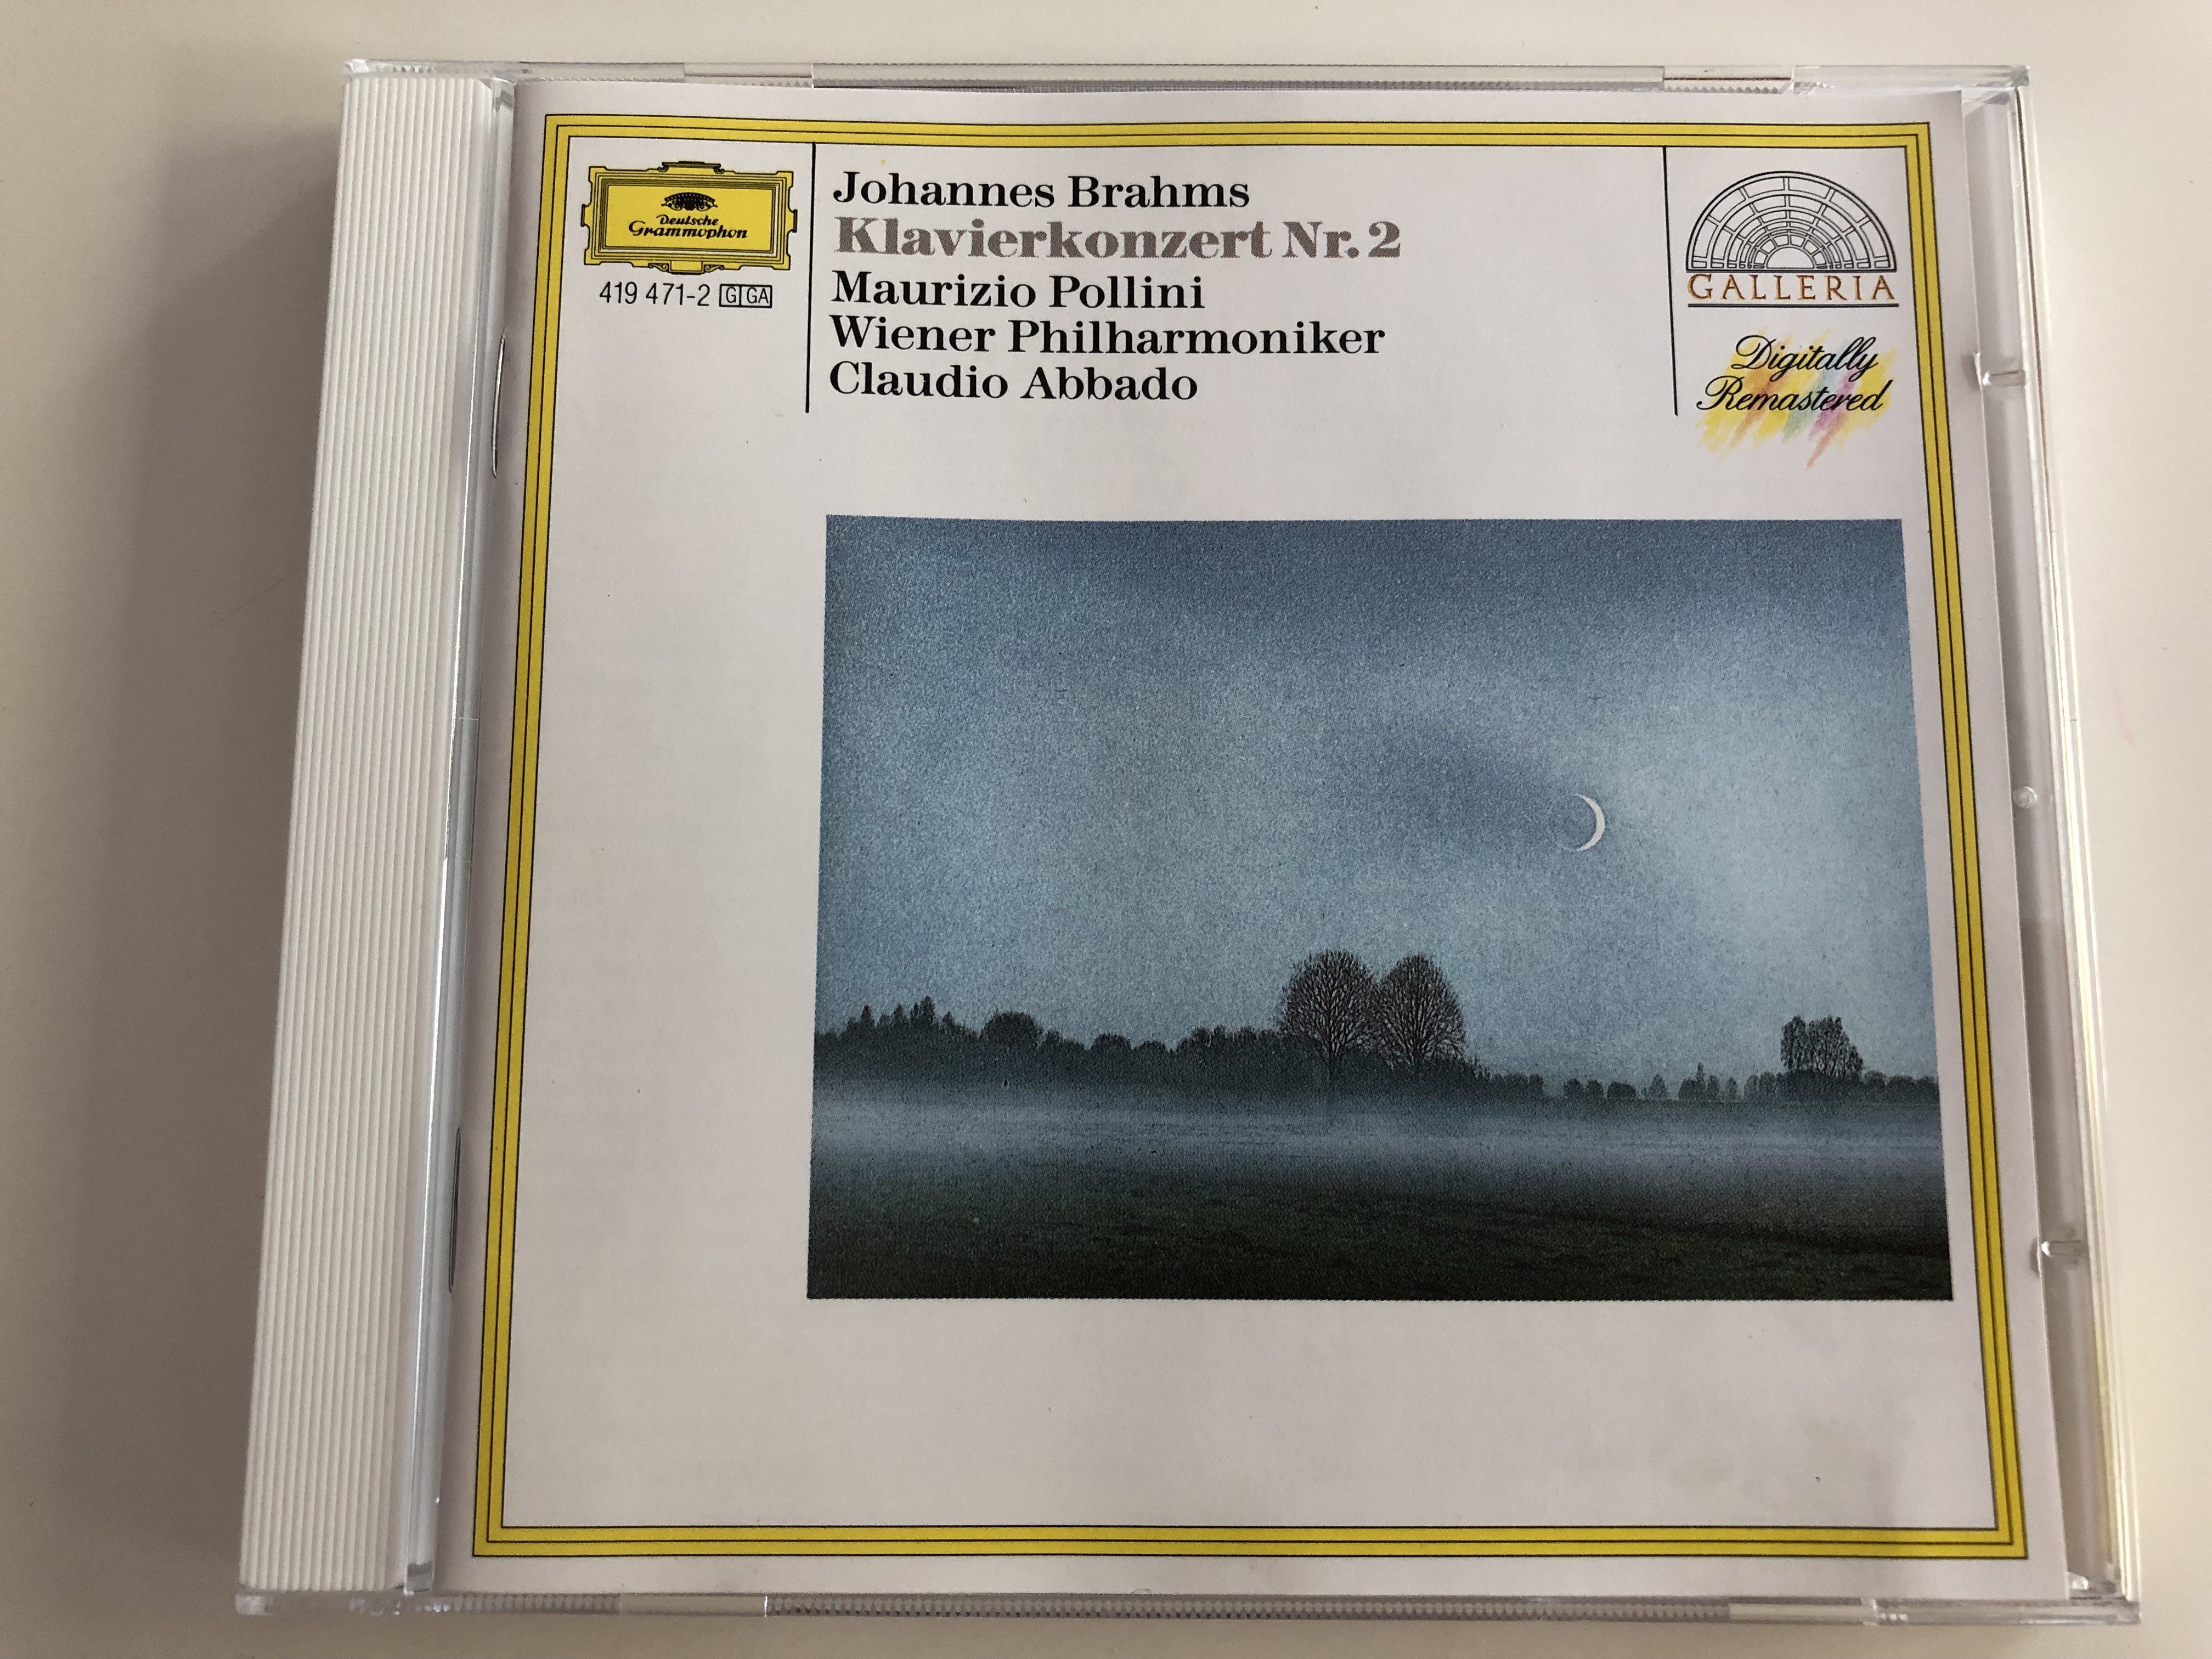 johannes-brahms-klavierkonzert-nr.-2-maurizio-pollini-wiener-philharmoniker-conducted-by-claudio-abbado-robert-scheiwein-cello-solo-audio-cd-1-.jpg